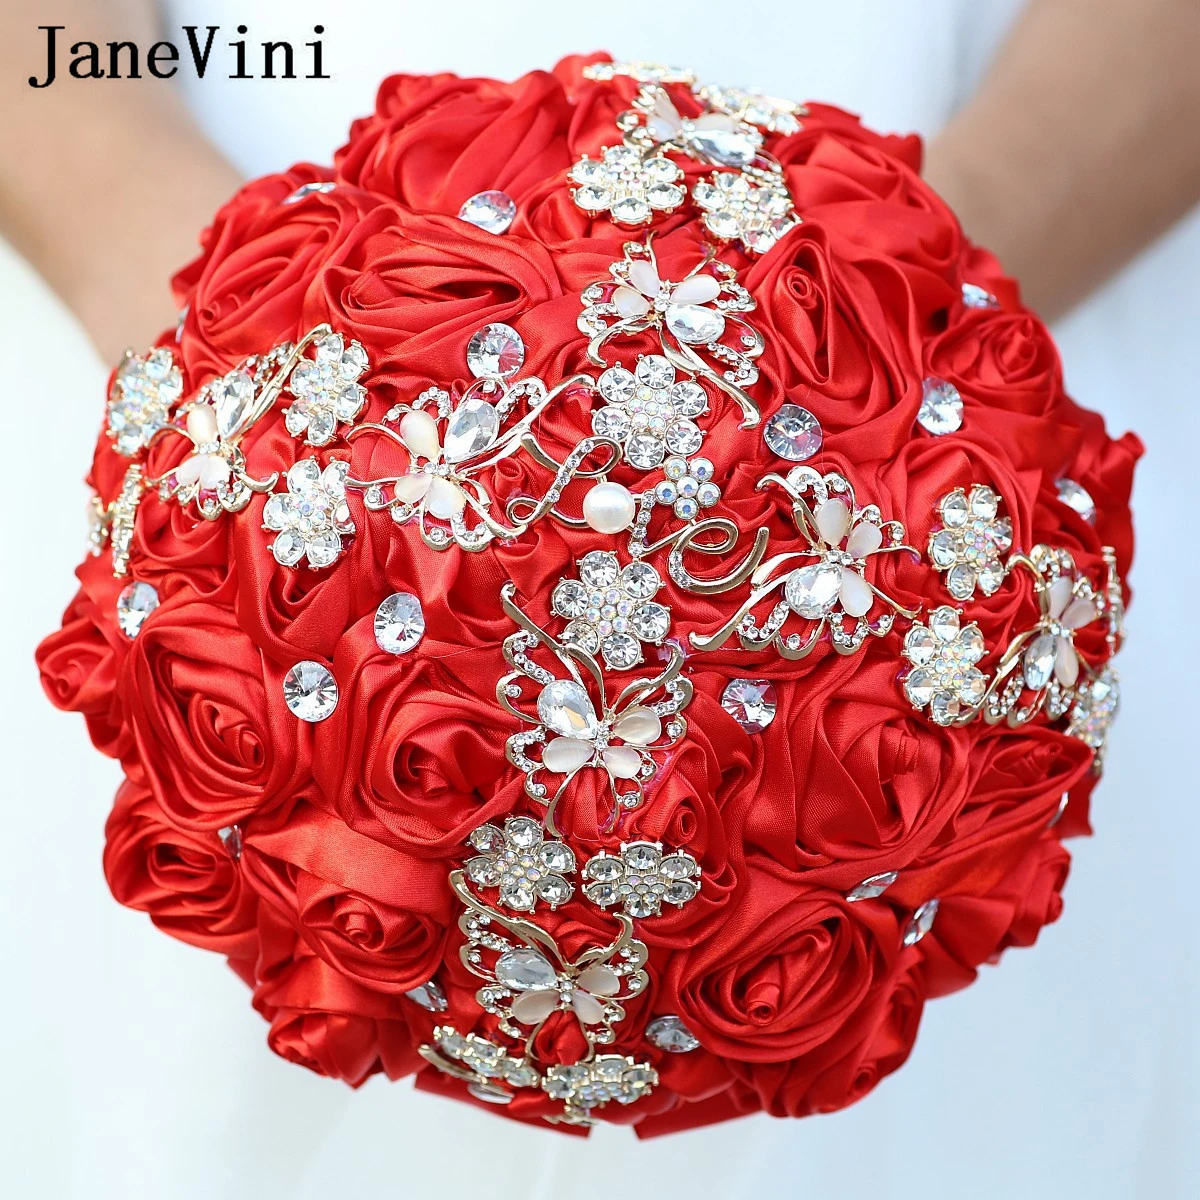 

JaneVini Luxury Crystal Red Bouquet Rhinestone Jewelry Handmade Roses Bridal Bouquets for Wedding Bride Flowers Ramo De Boda